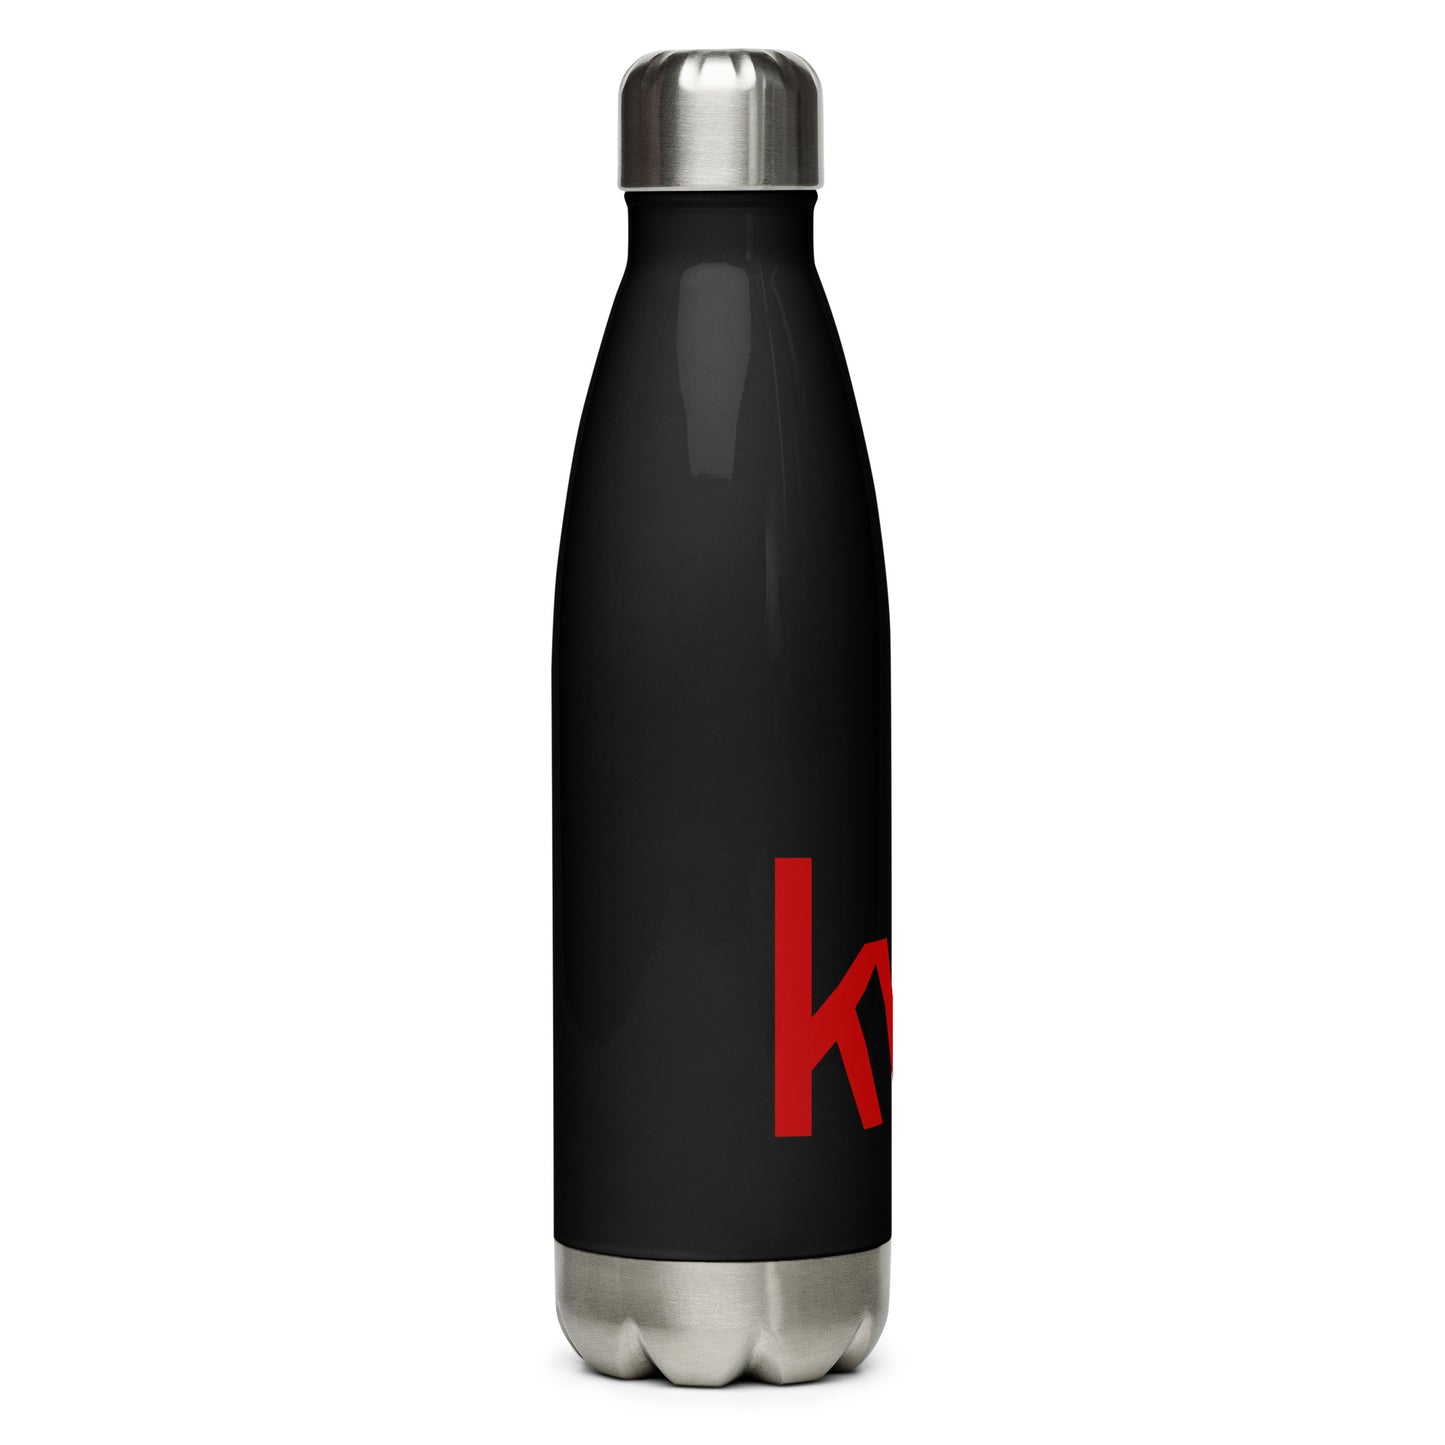 KW Stainless Steel Water Bottle